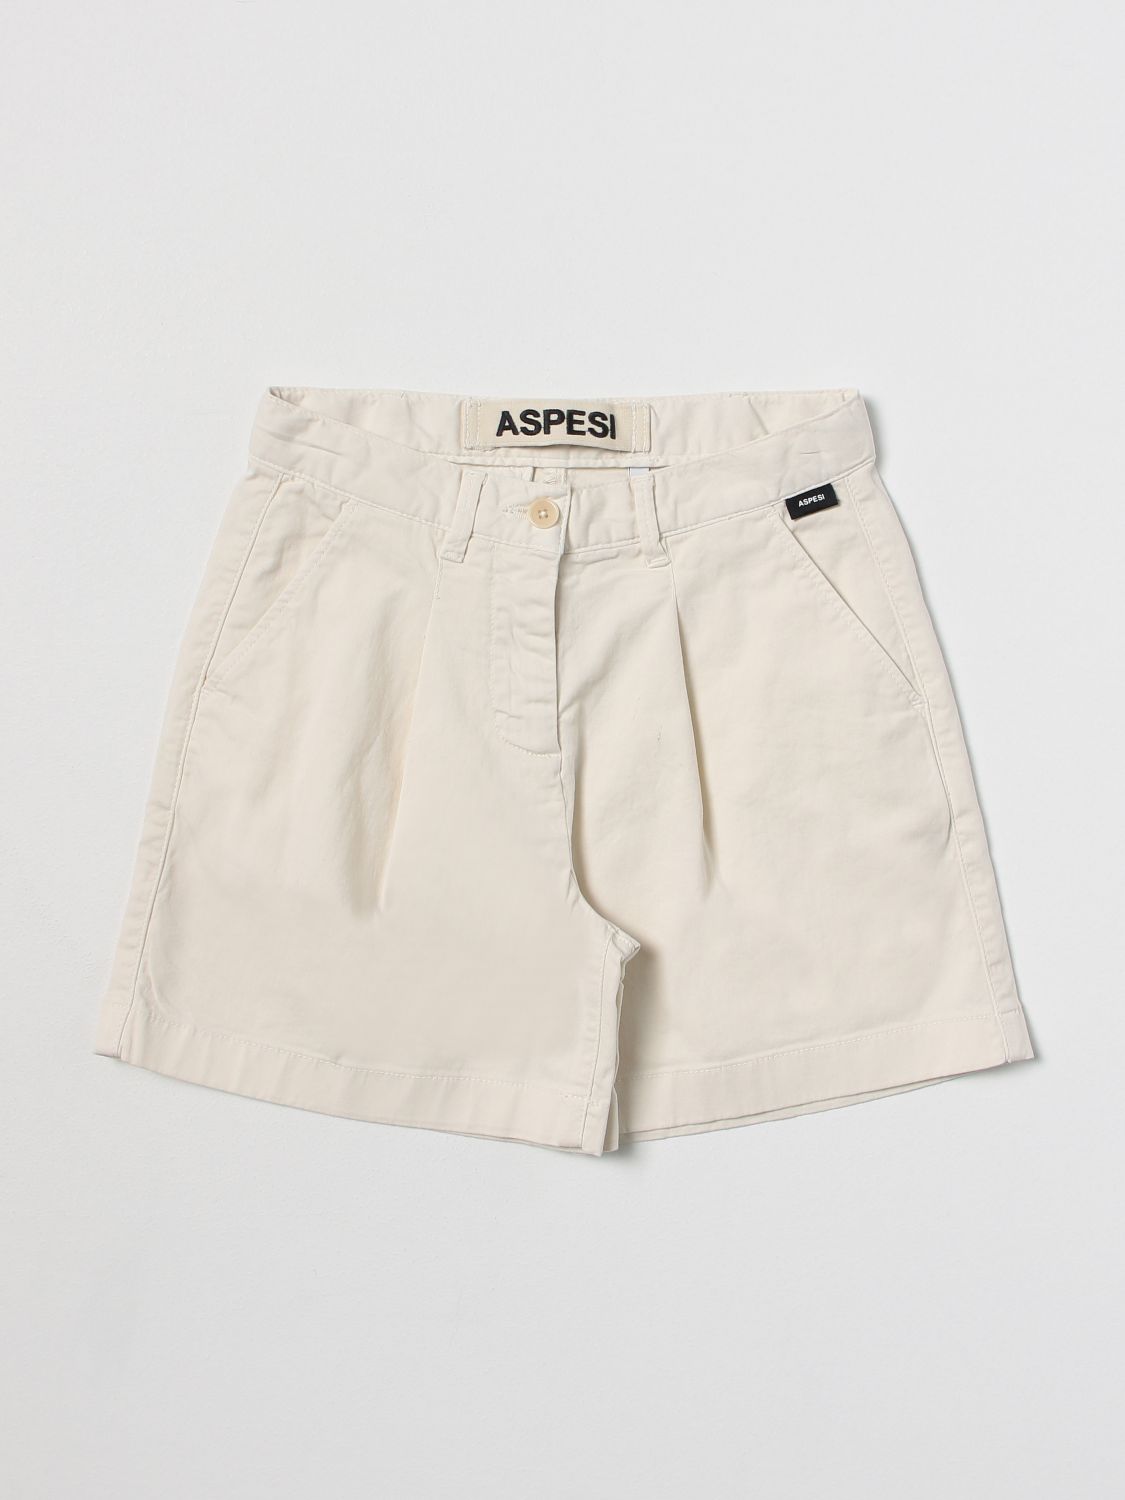 Aspesi Pants  Kids Color Ivory